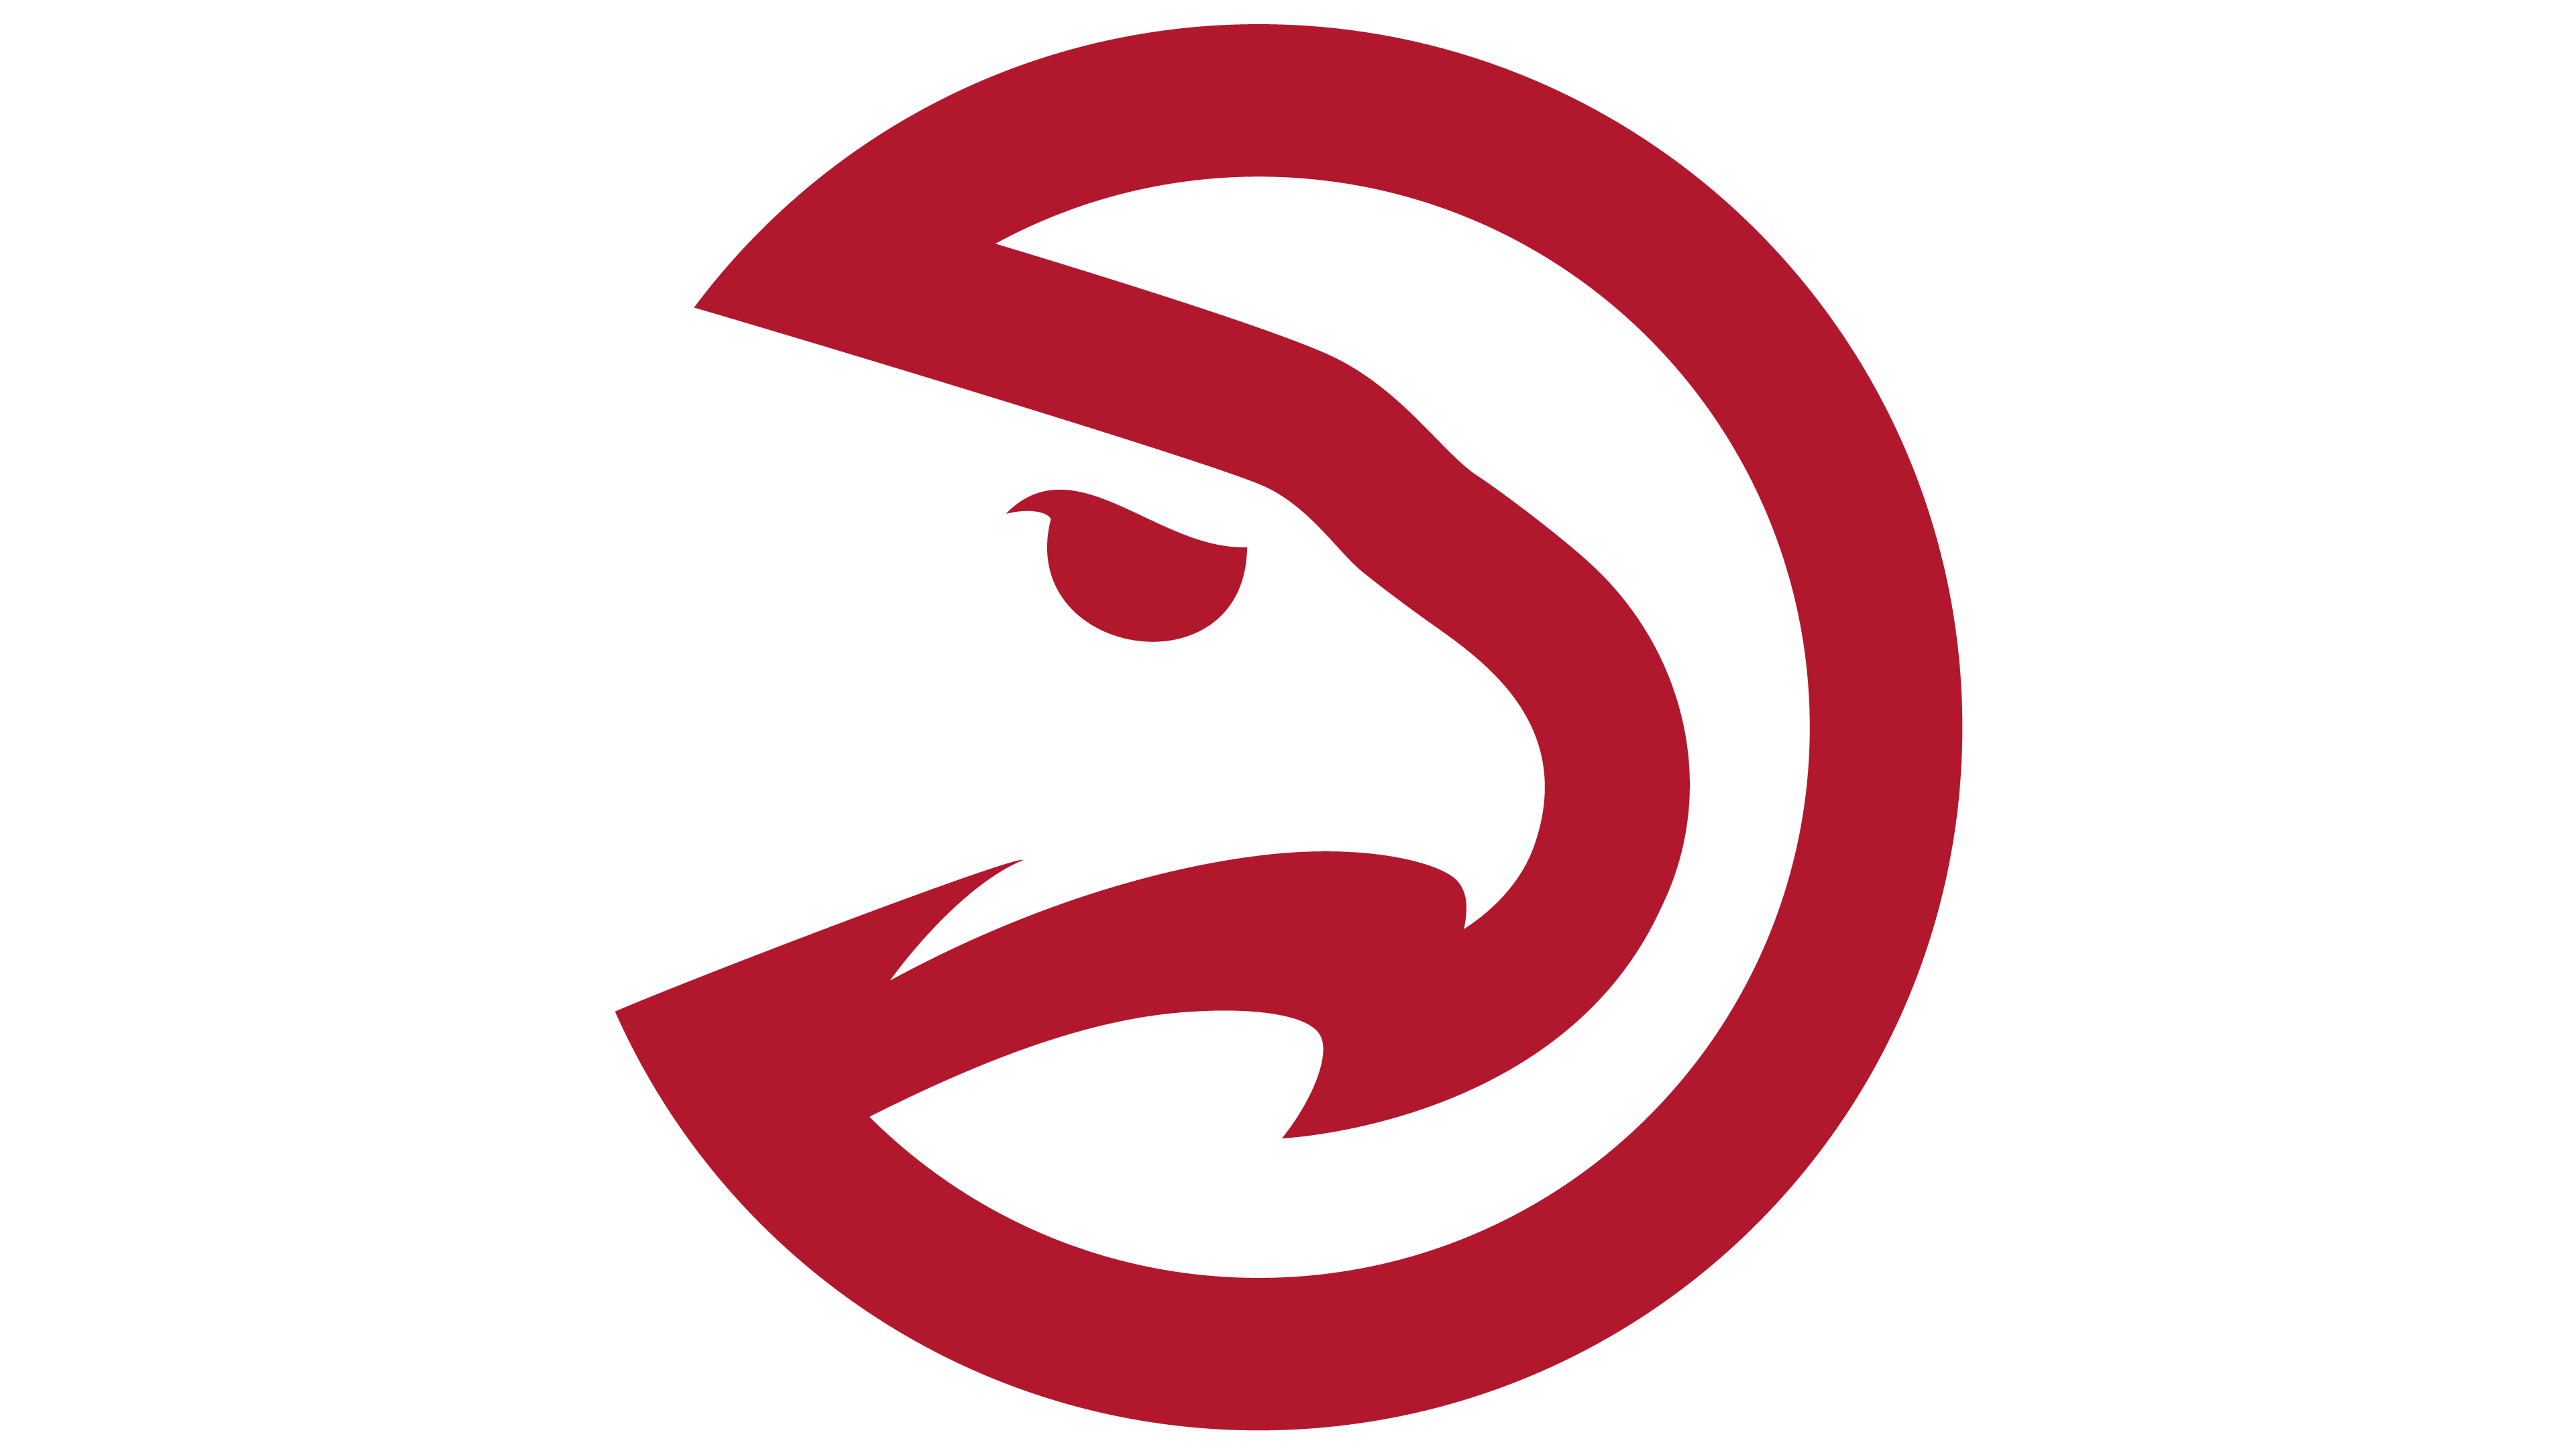 ATL Hawks Logo - Atlanta Hawks Logo - Interesting History of the Team Name and emblem